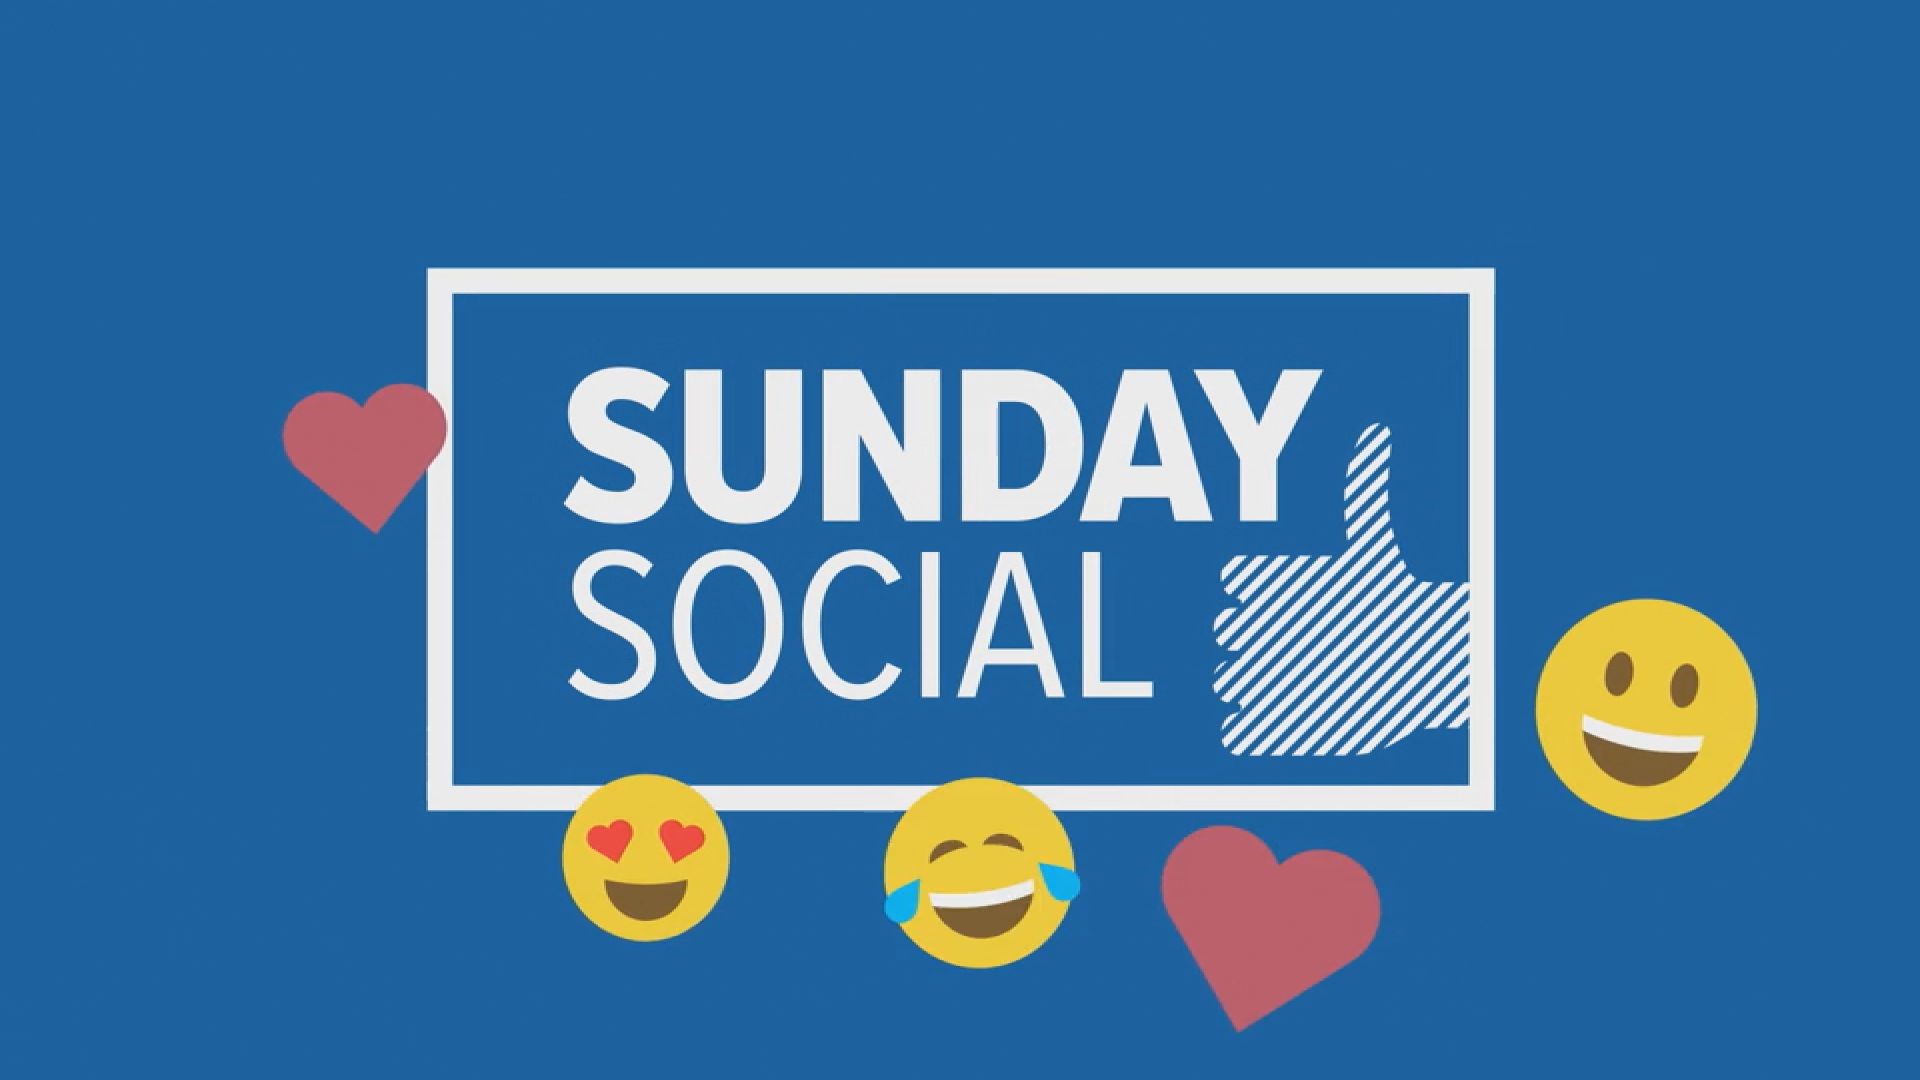 Ryan Breton and Samantha York share their favorite social media posts of the week.